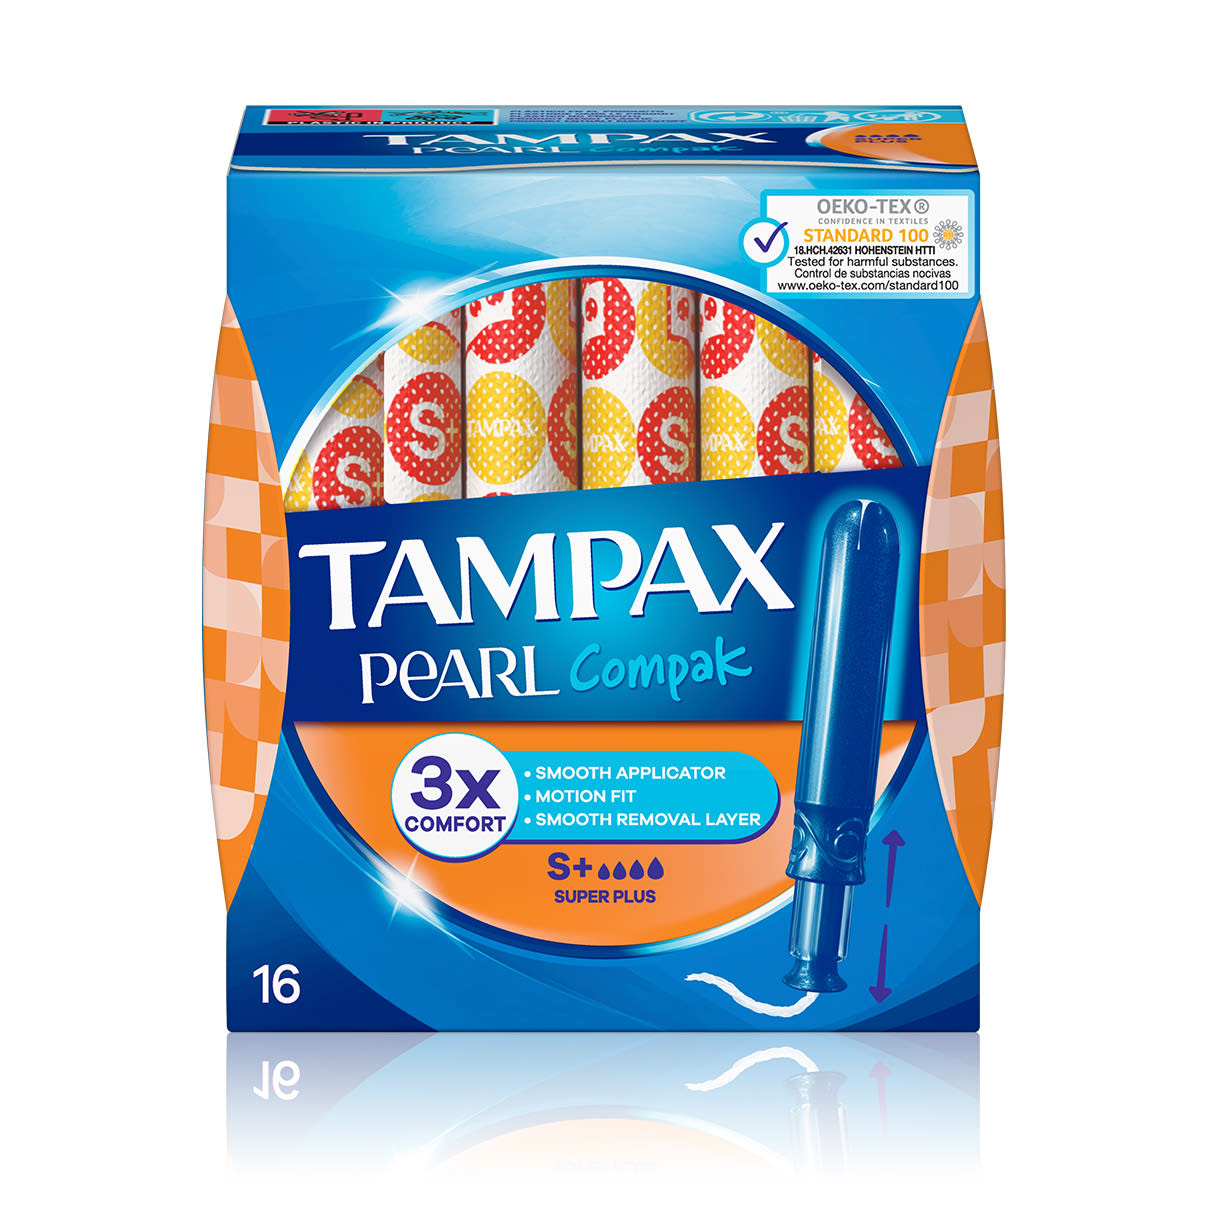 Tampax-Pearl-Compak-Super-Plus